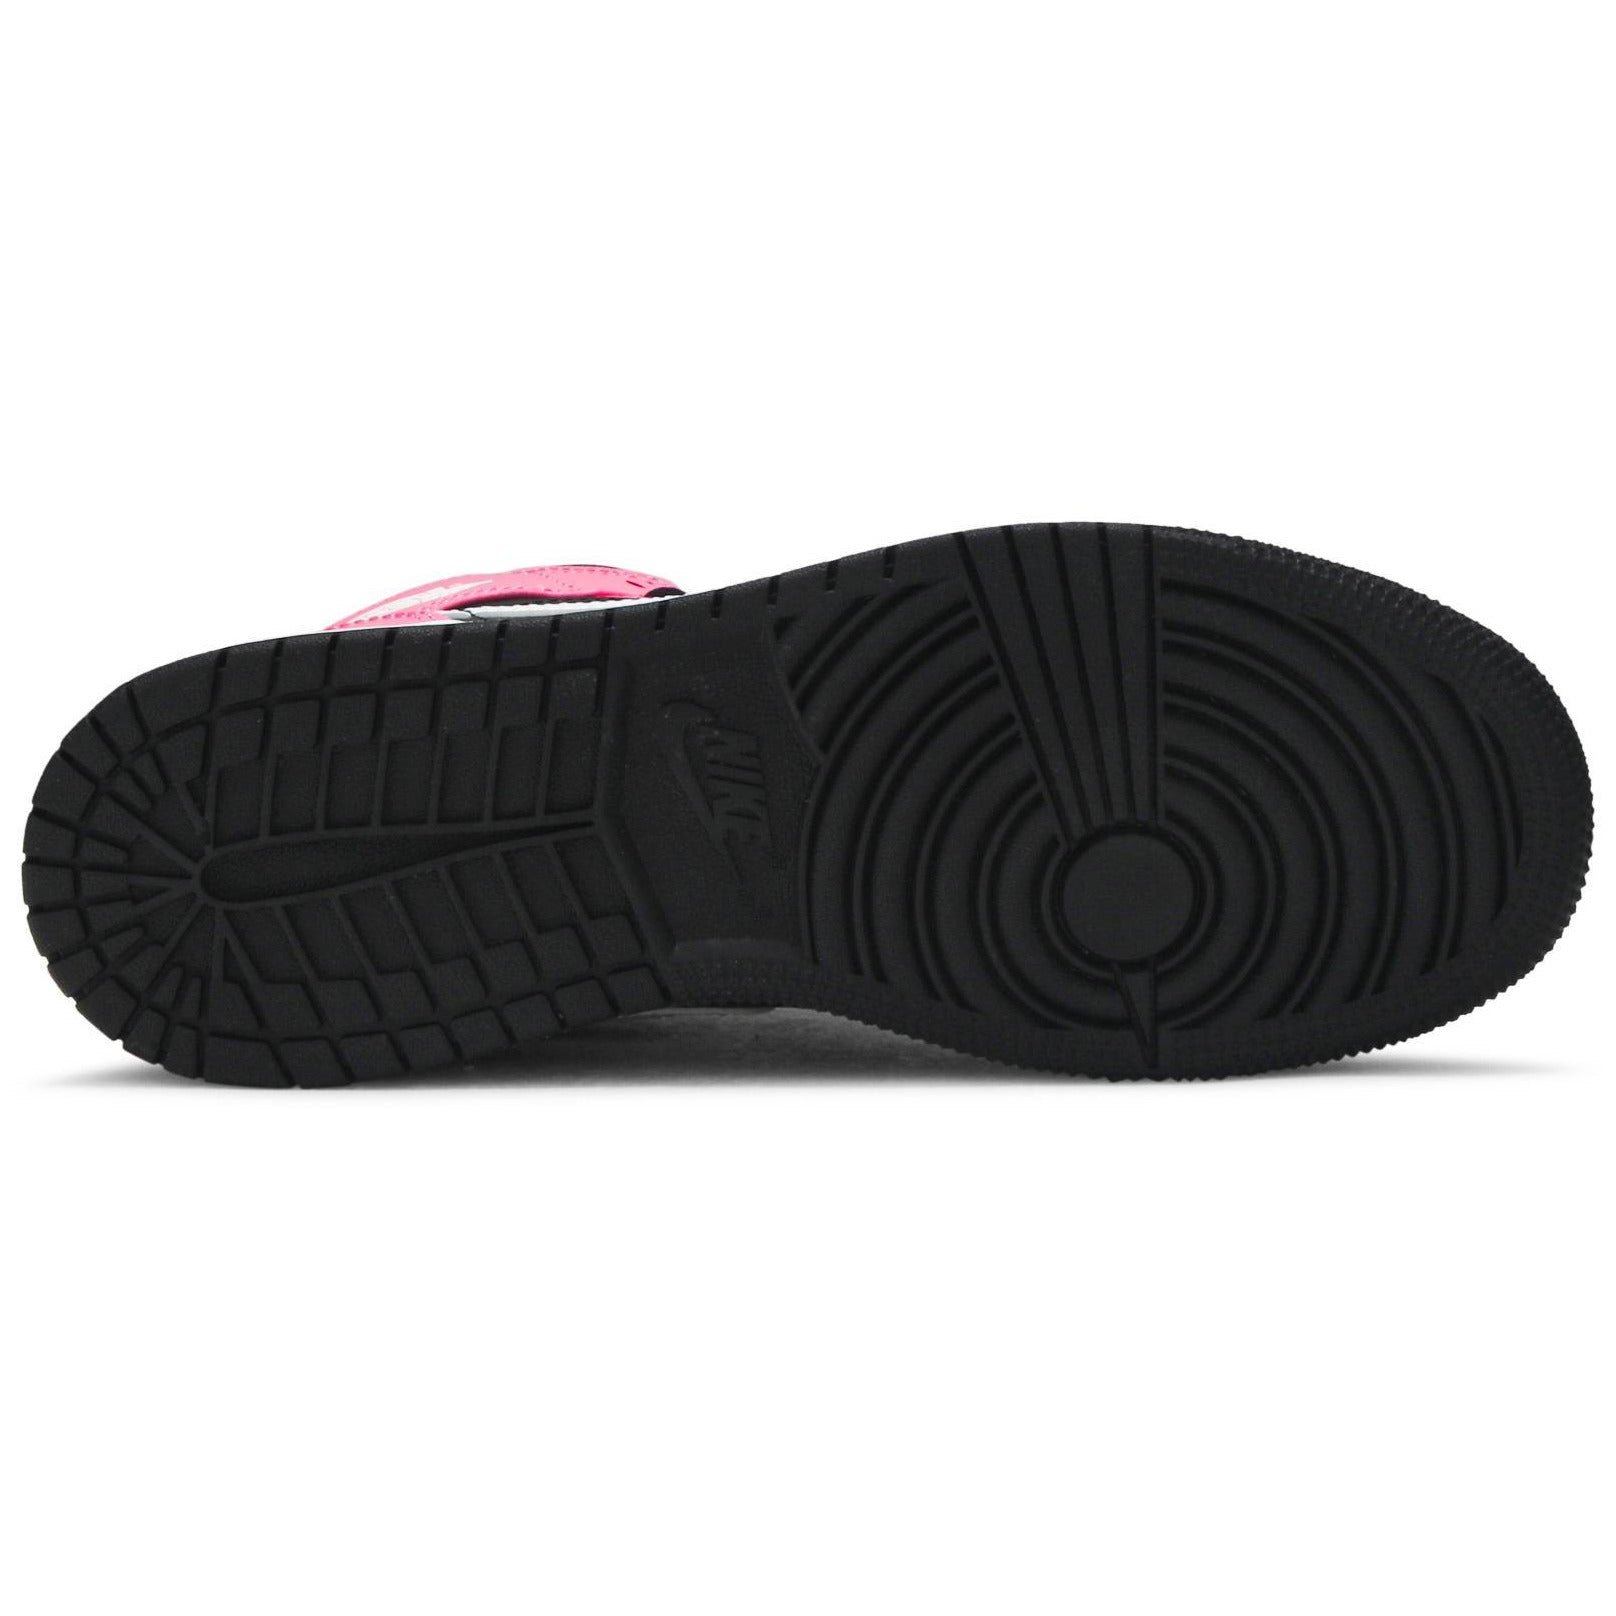 Nike Air Jordan 1 Mid Pinksicle (GS) Women's